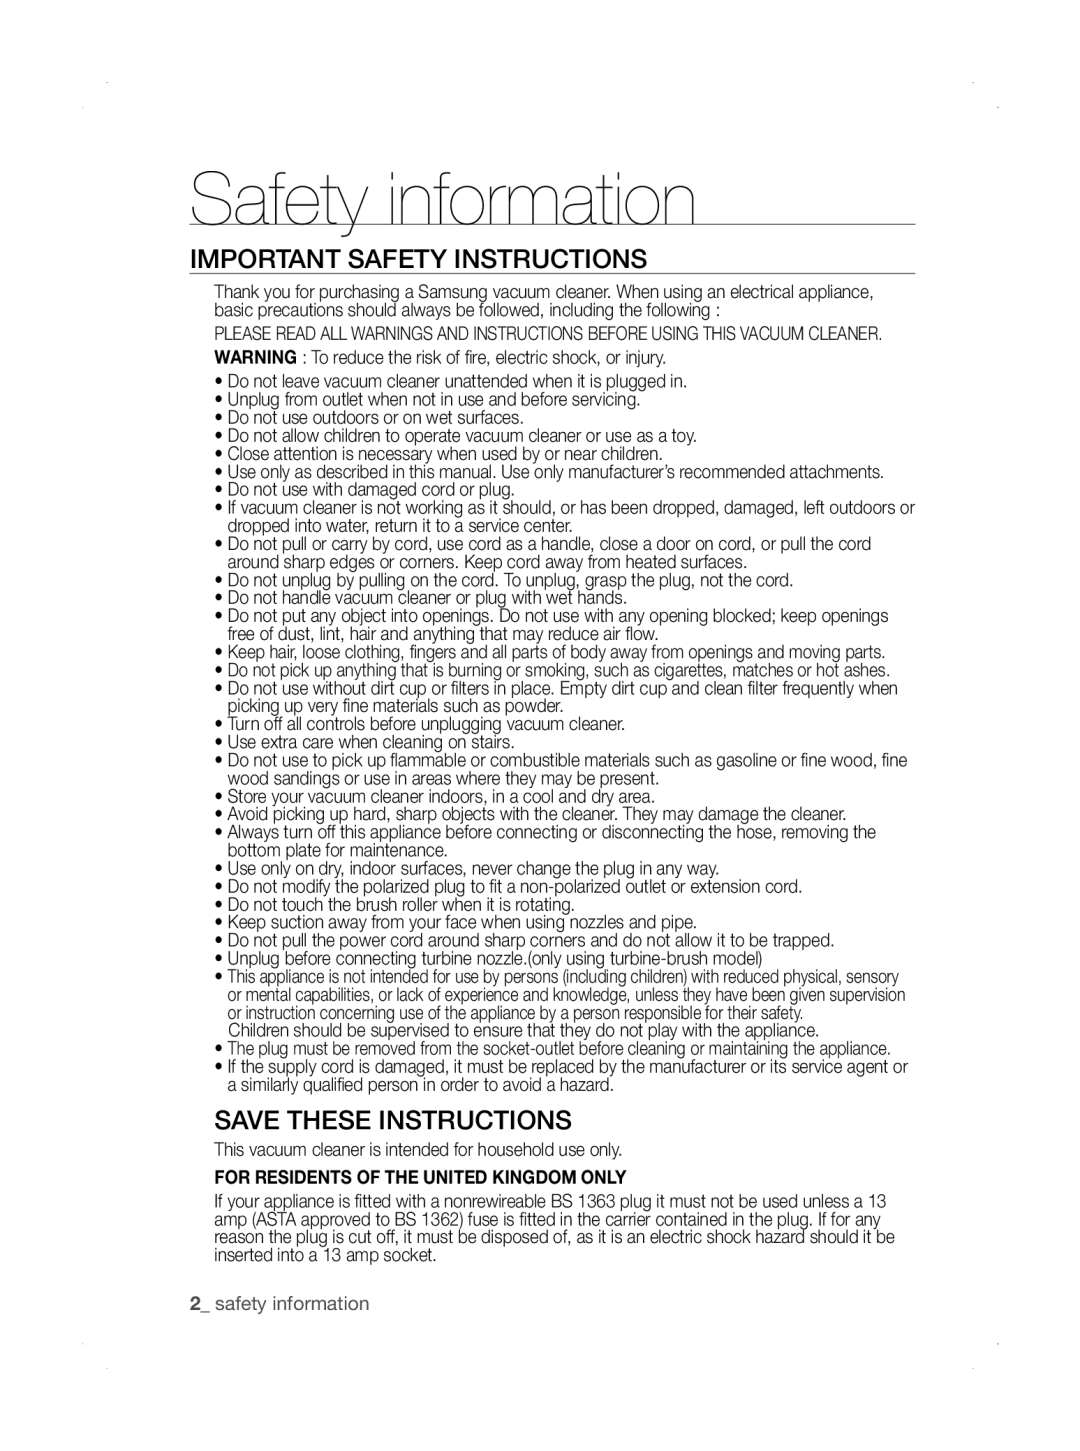 Samsung SU33 Series Safety information, IMpORTANT SAFETY INSTRUcTIONS, Save These Instructions, safety information 